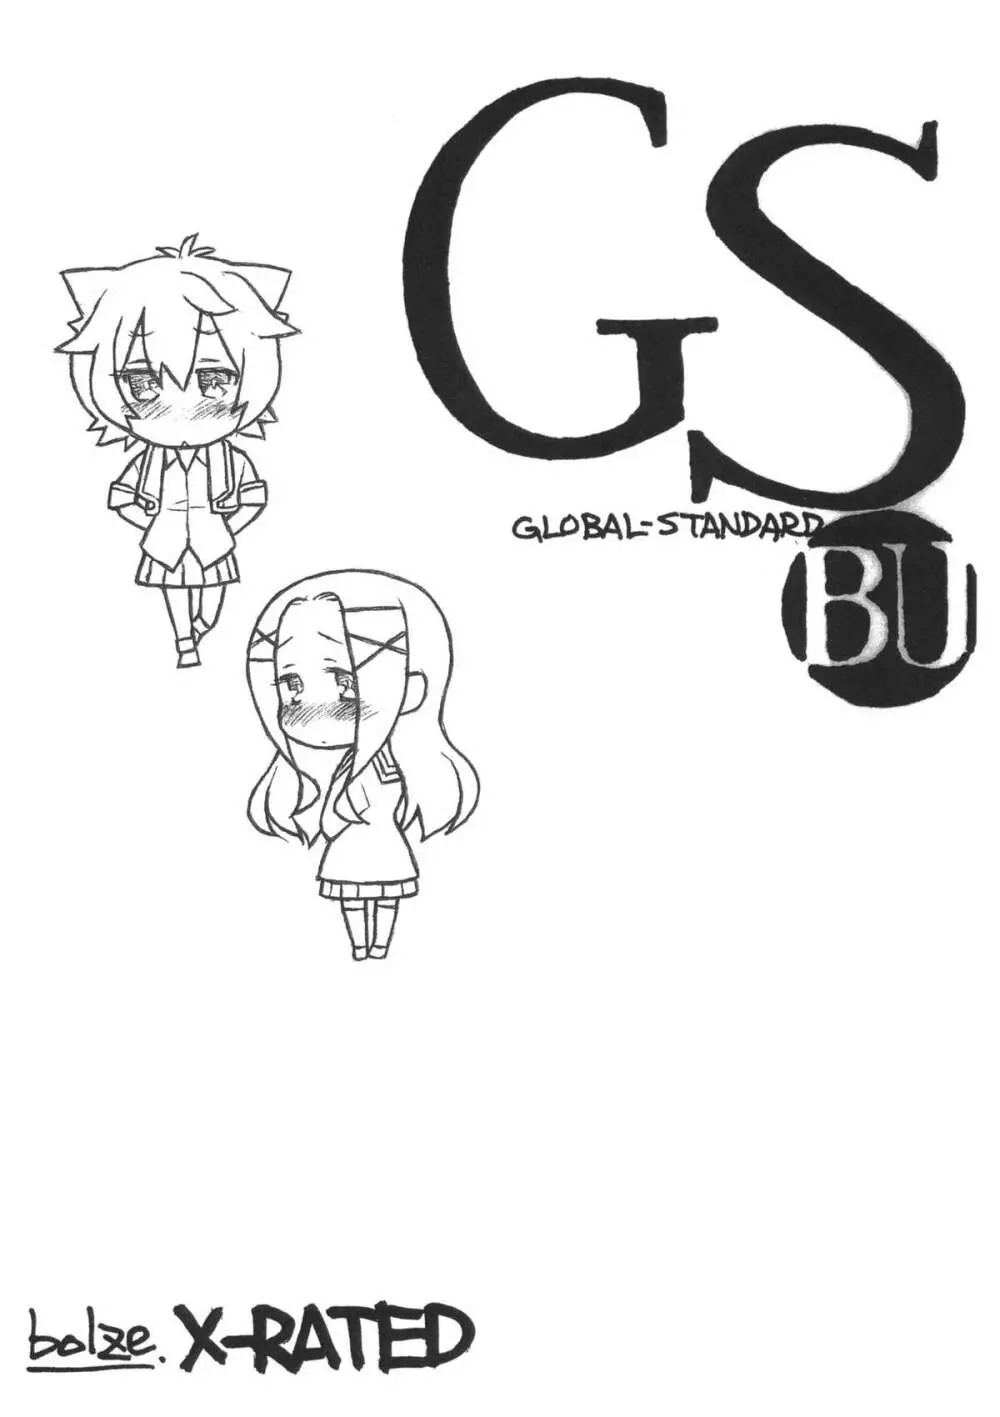 GS-BU